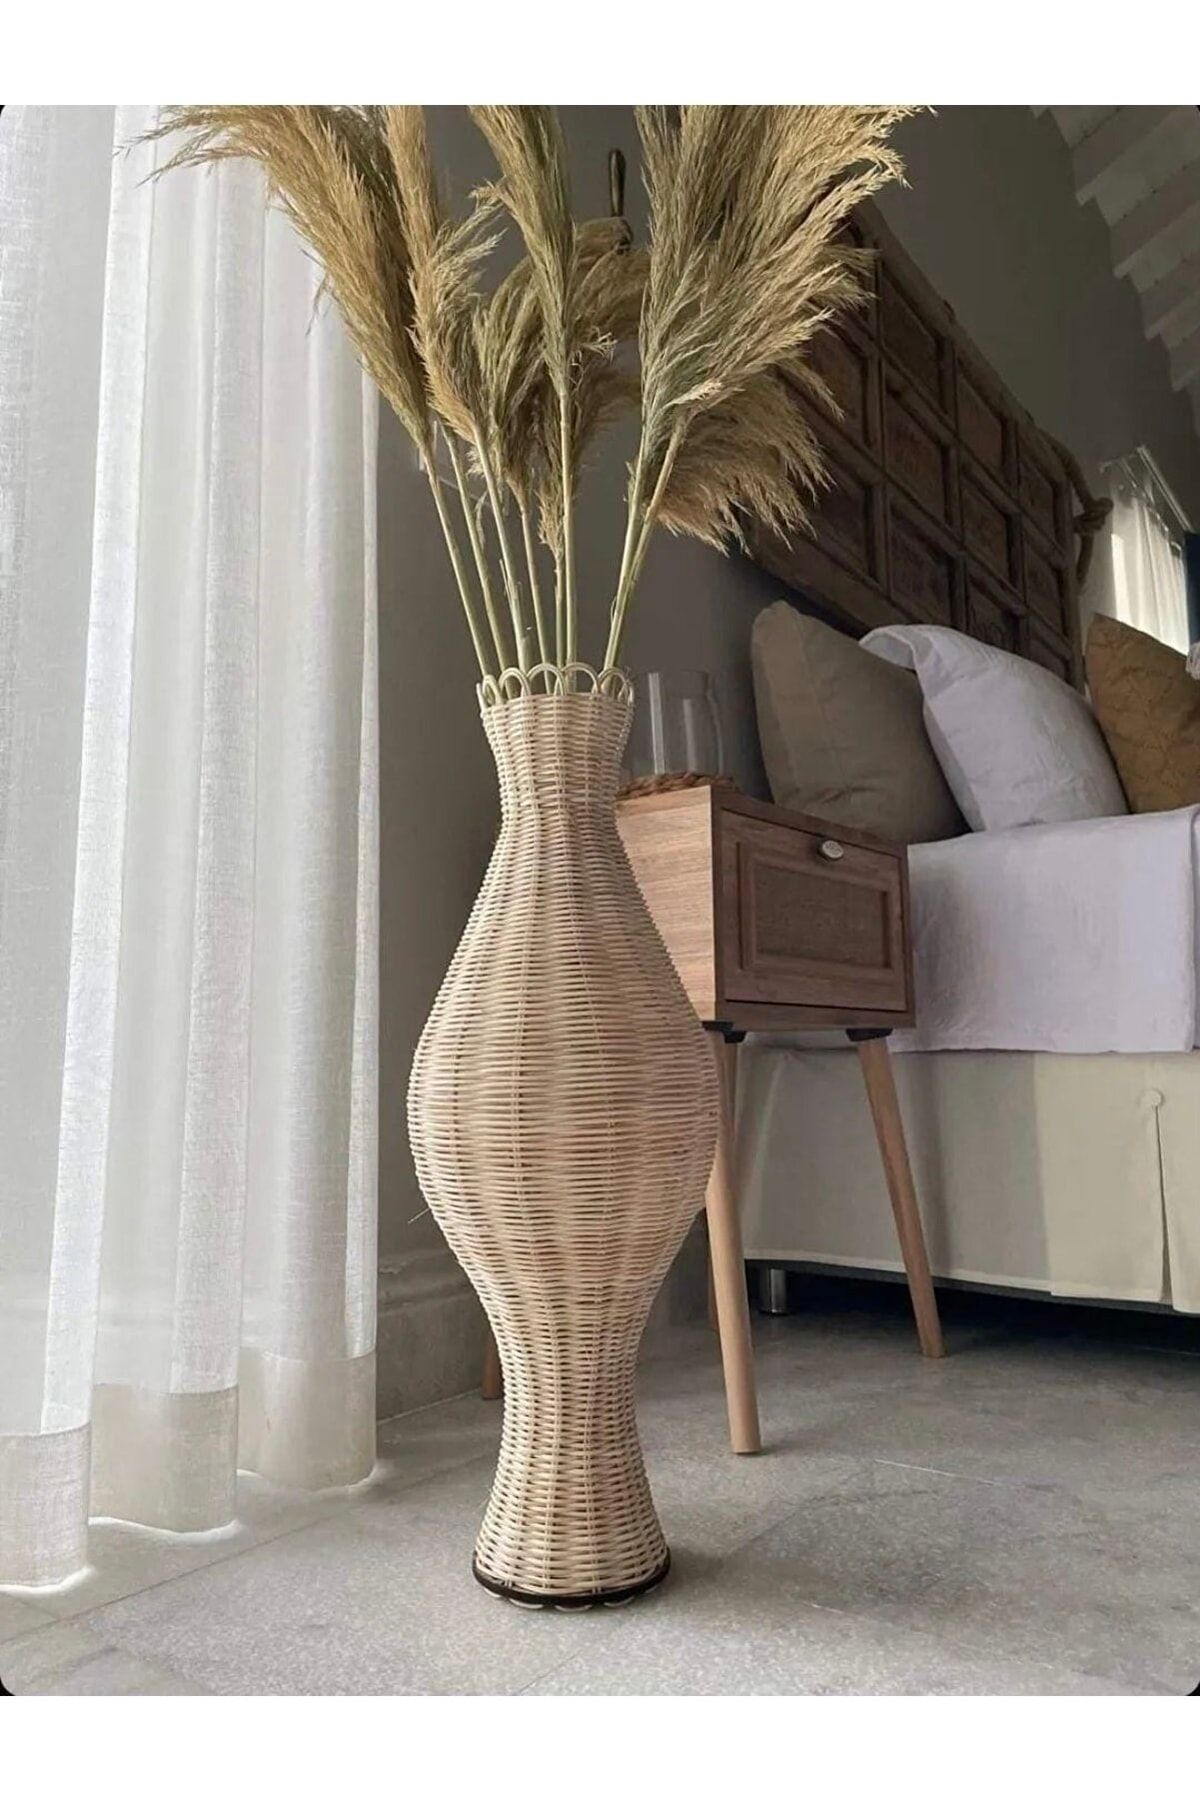 WLLN Rattan Dekoratif Uzun Vazo